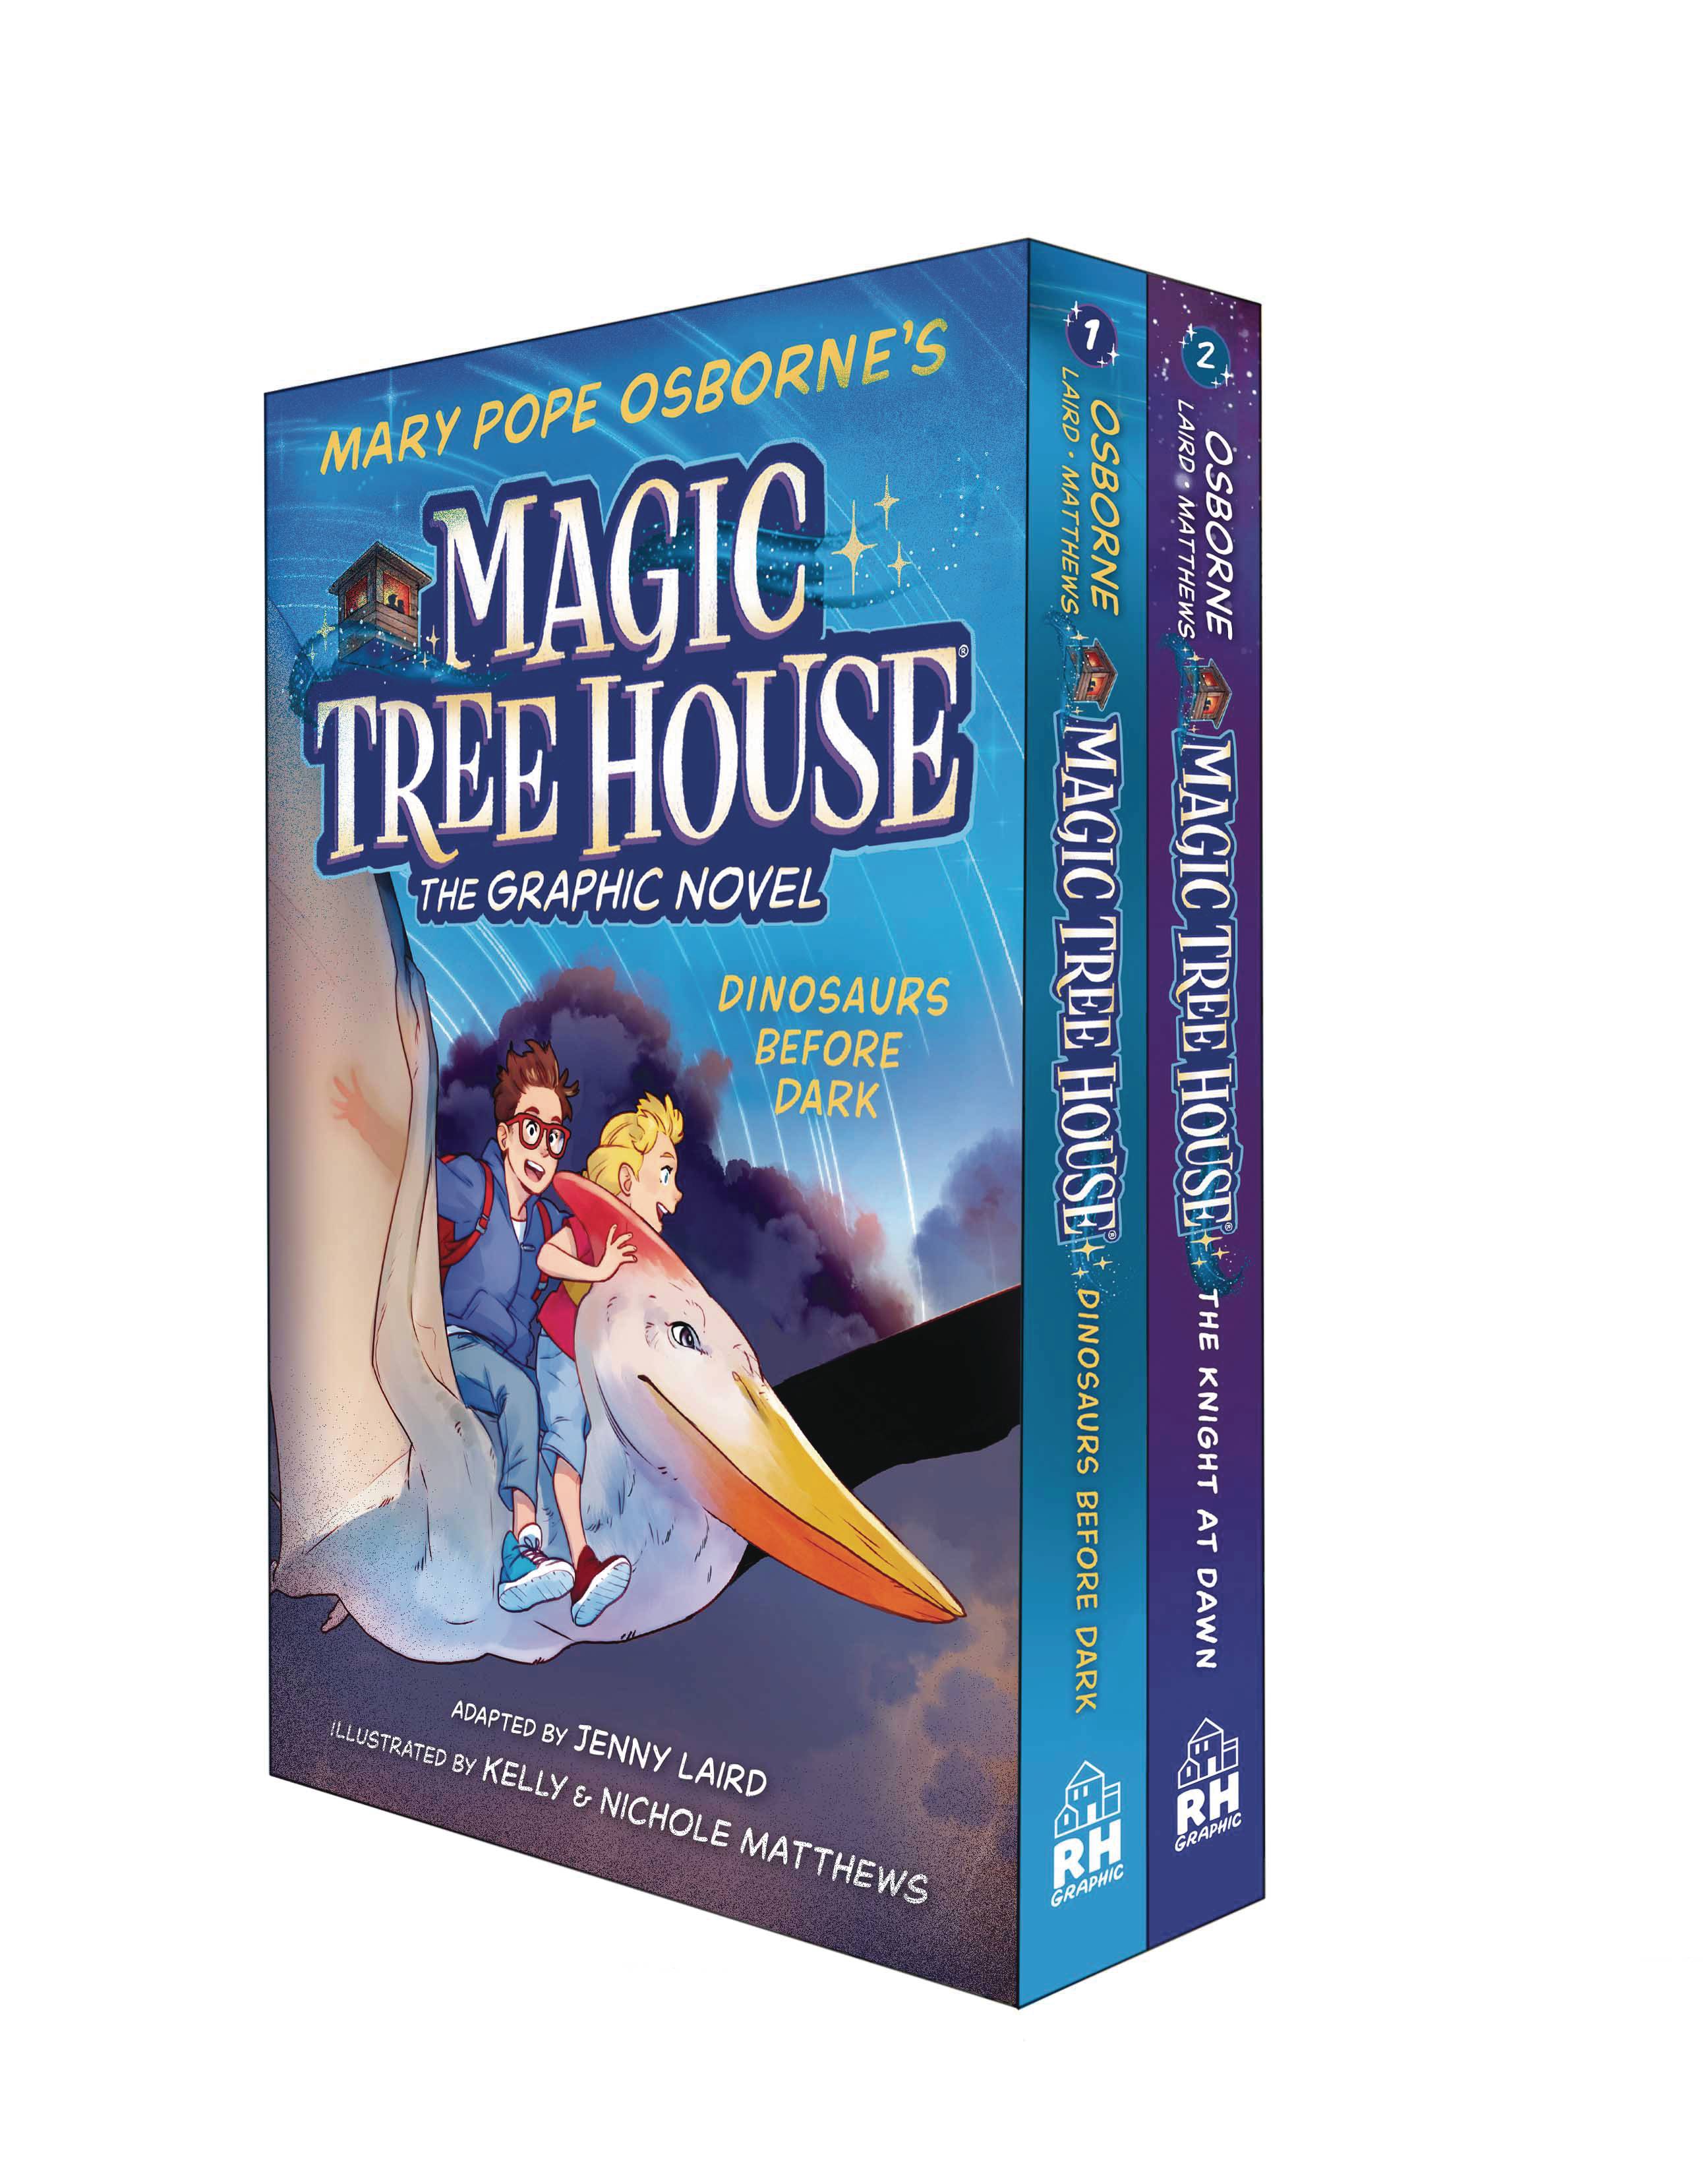 MAGIC TREE HOUSE BOX SET GN VOL 1 & 2